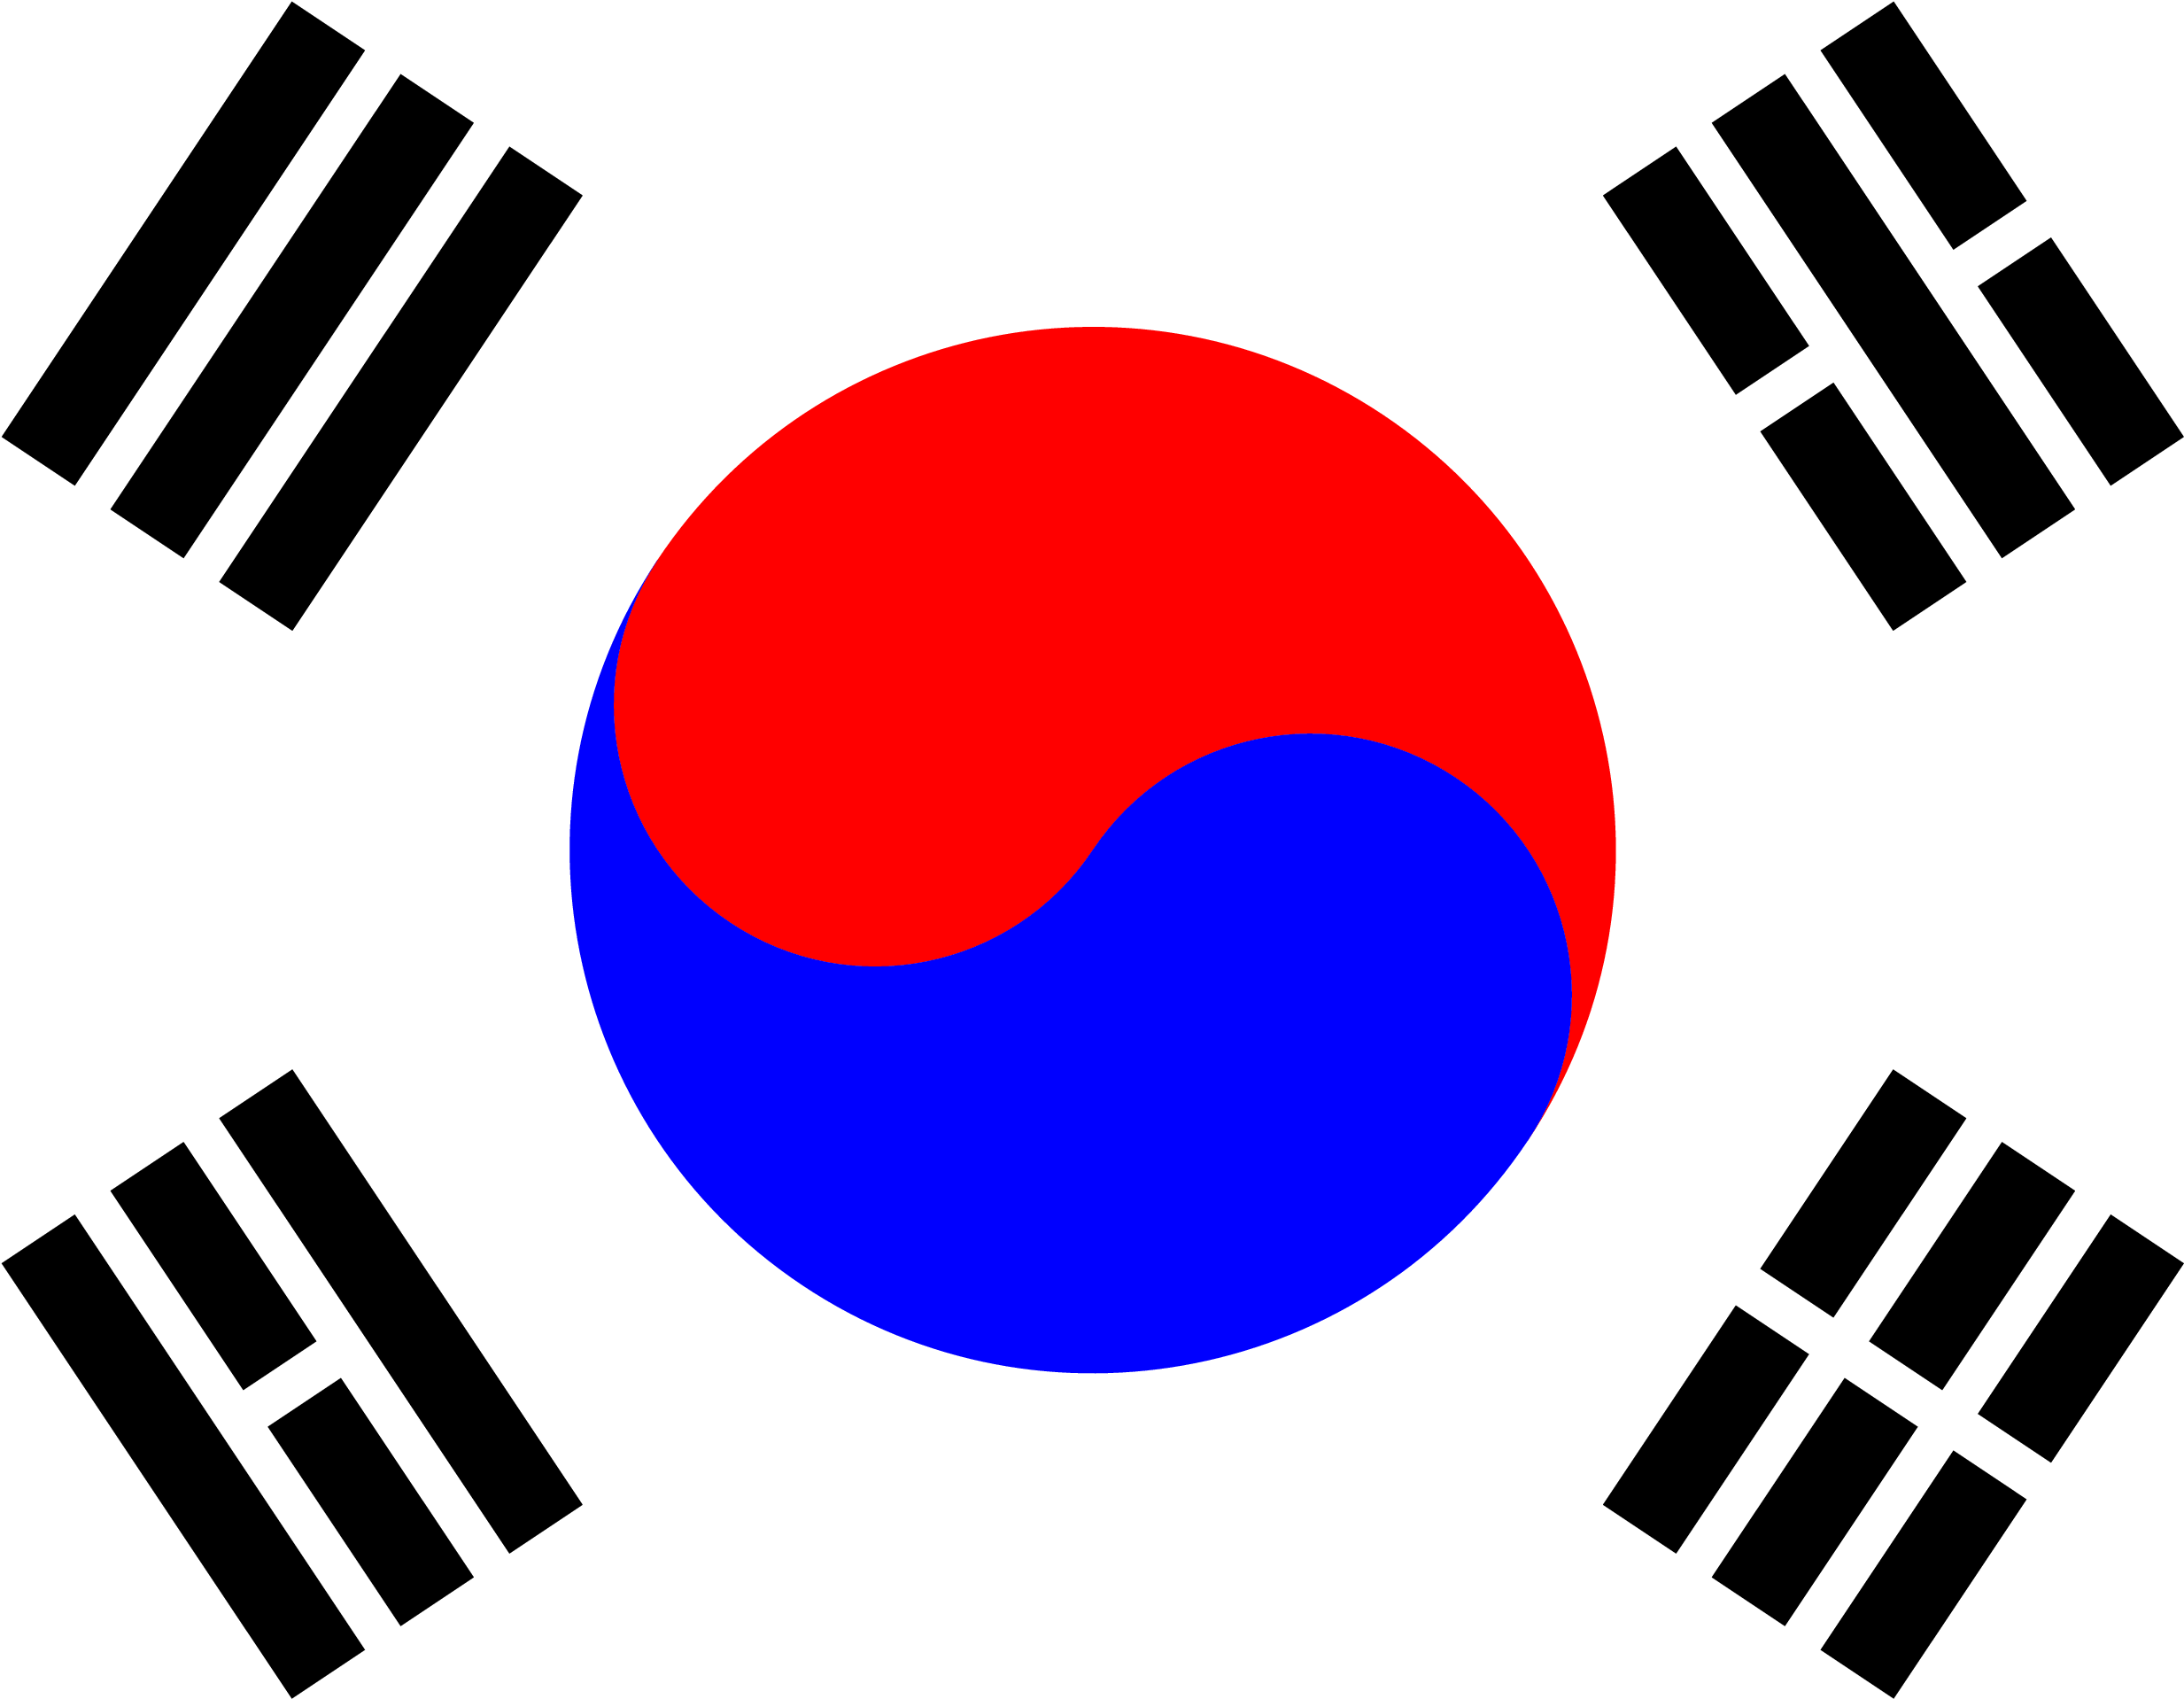 South Korea Flag PNG HD Quality